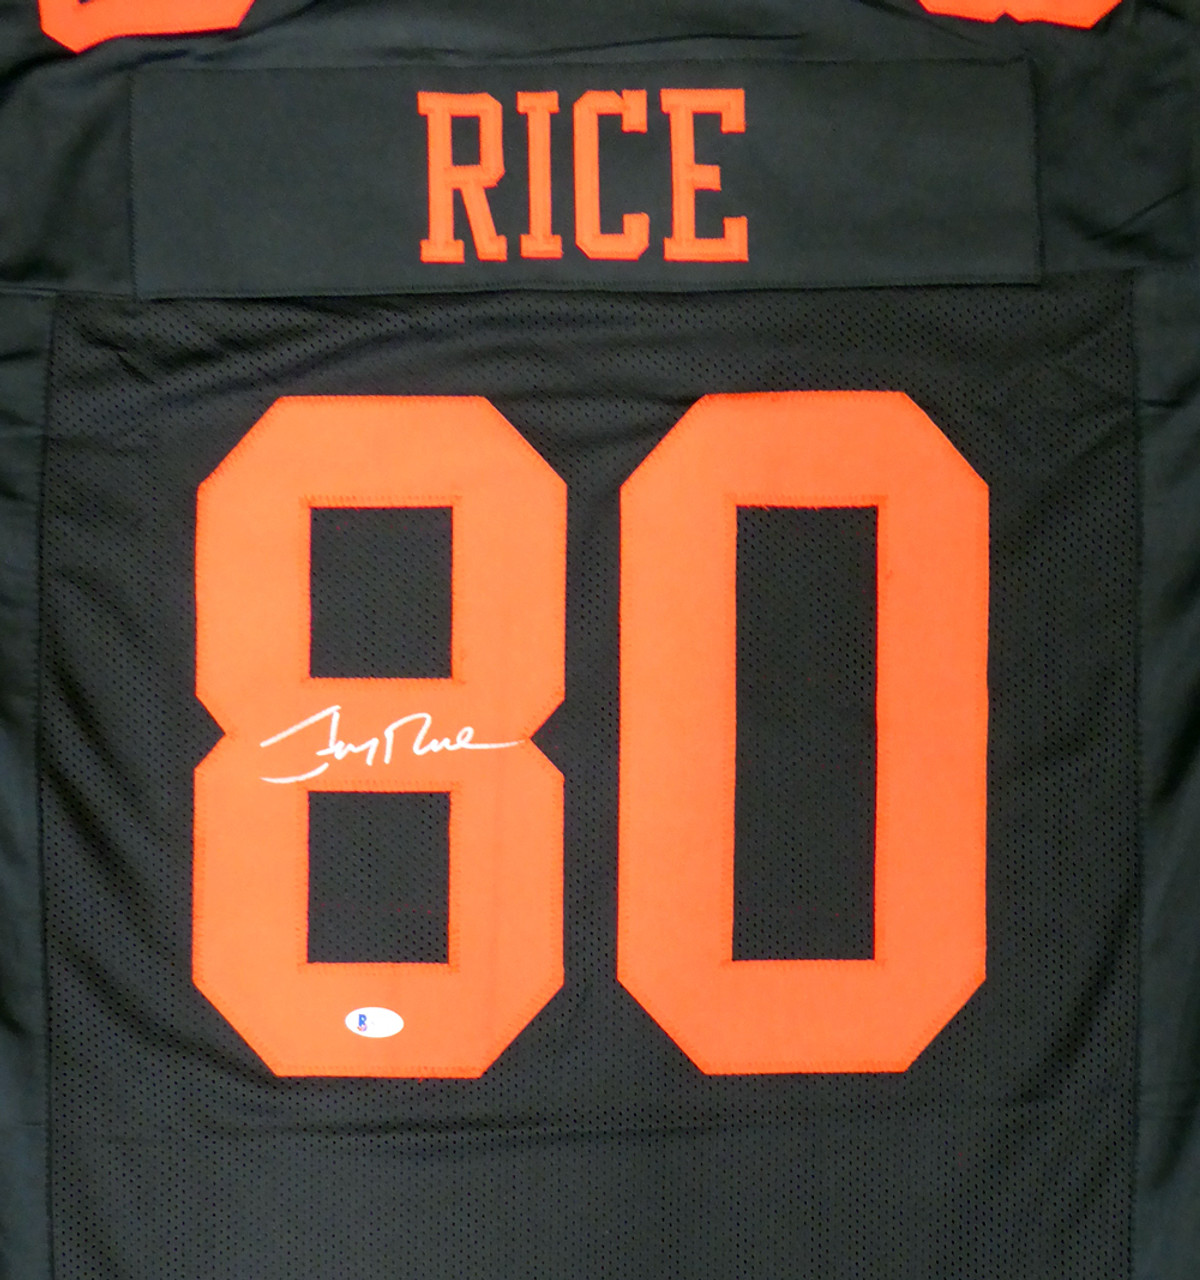 black jerry rice 49ers jersey